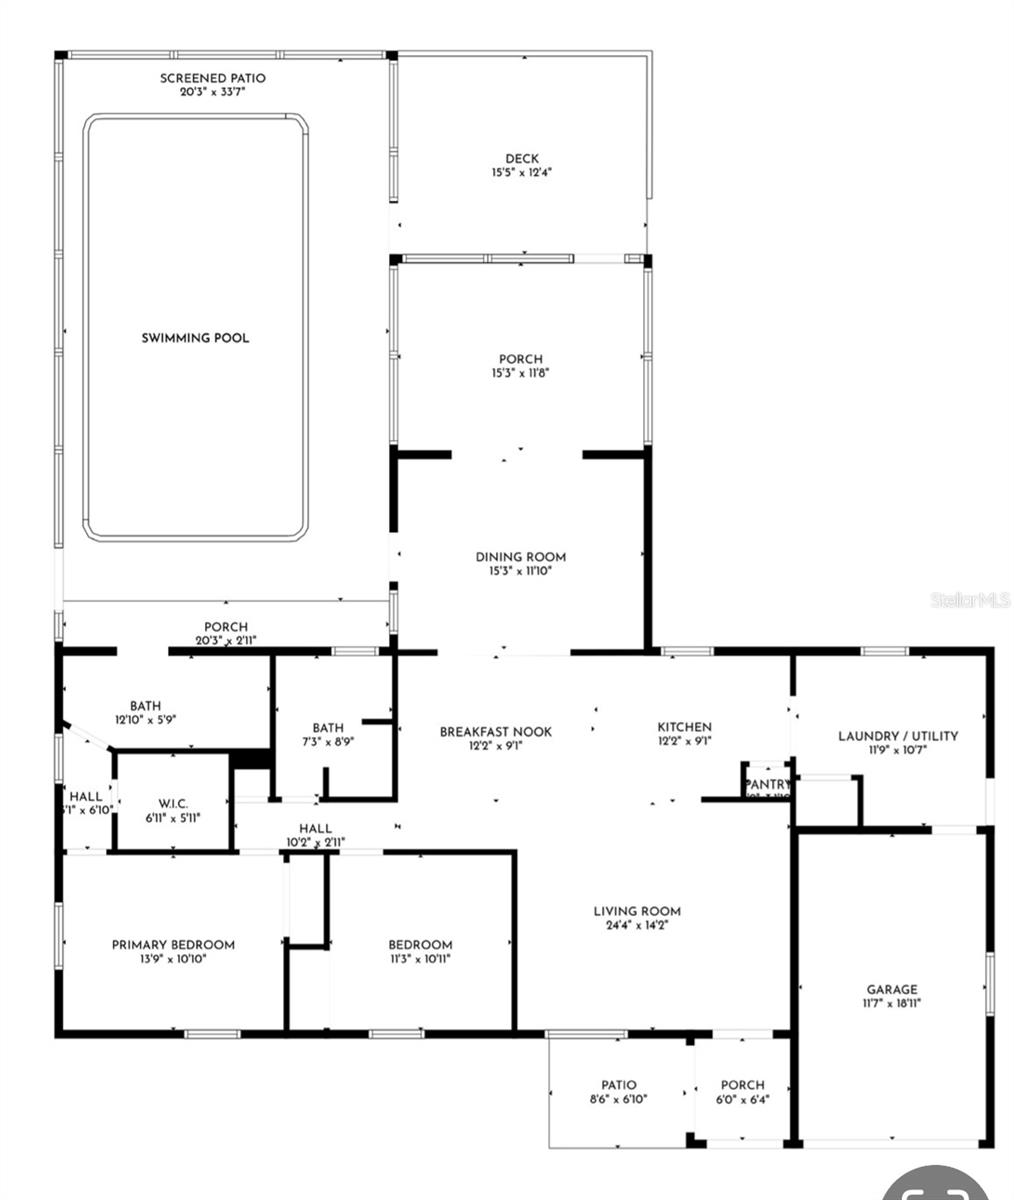 Floor Plan of the Home